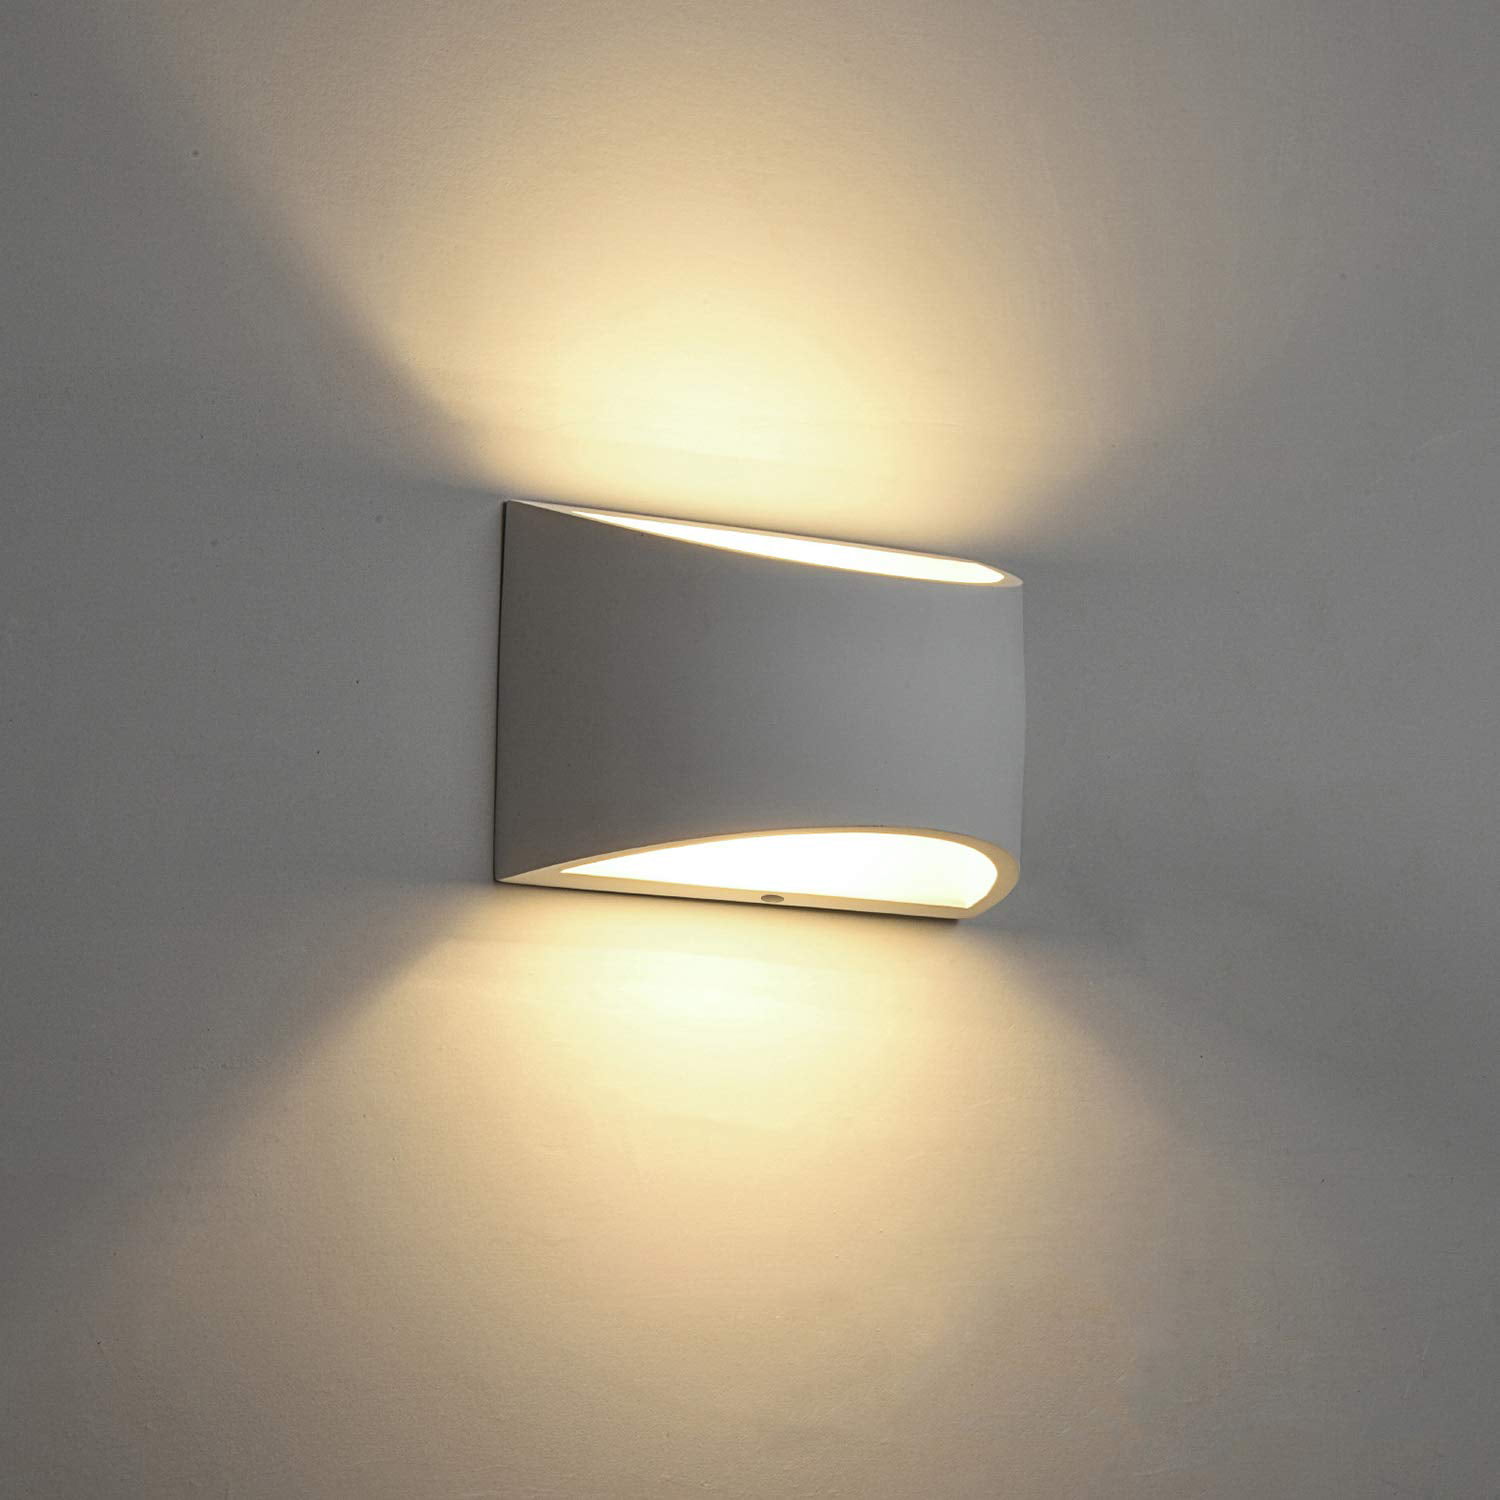 Modern LED Wall Light Motion Sensor Exterior Up Down Cube Sconce Lamp Fixtures 